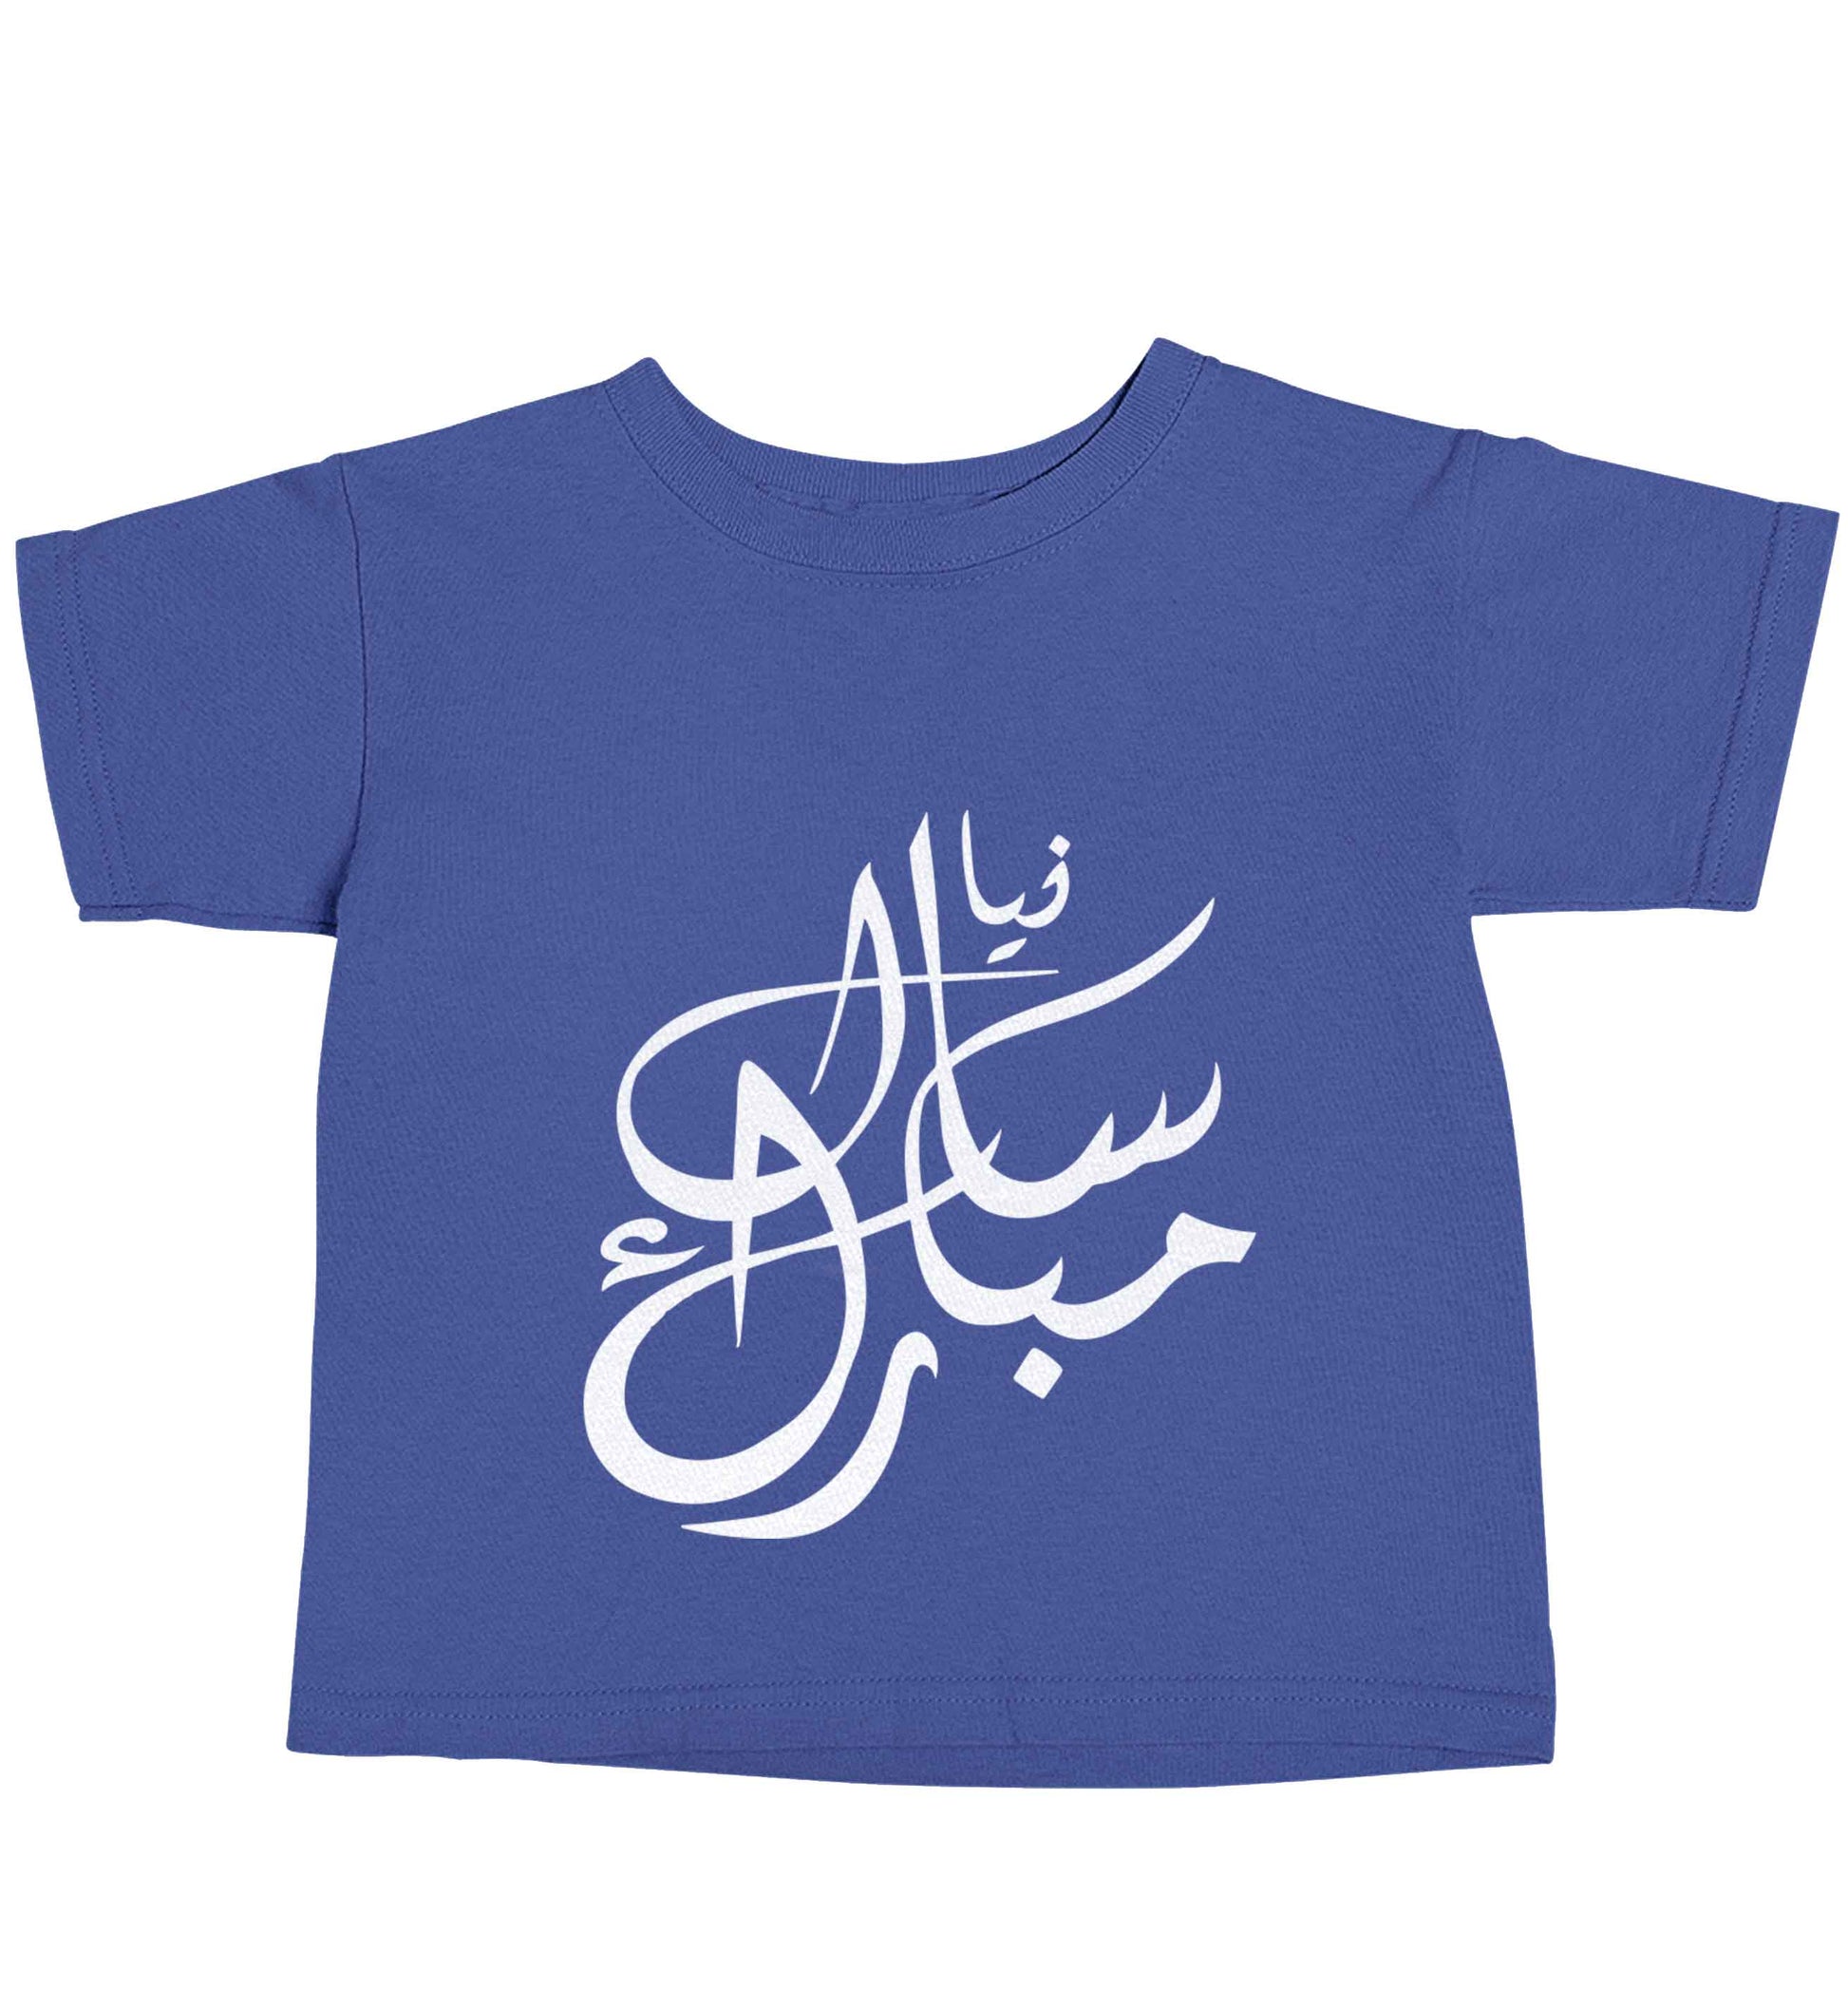 Urdu Naya saal mubarak blue baby toddler Tshirt 2 Years